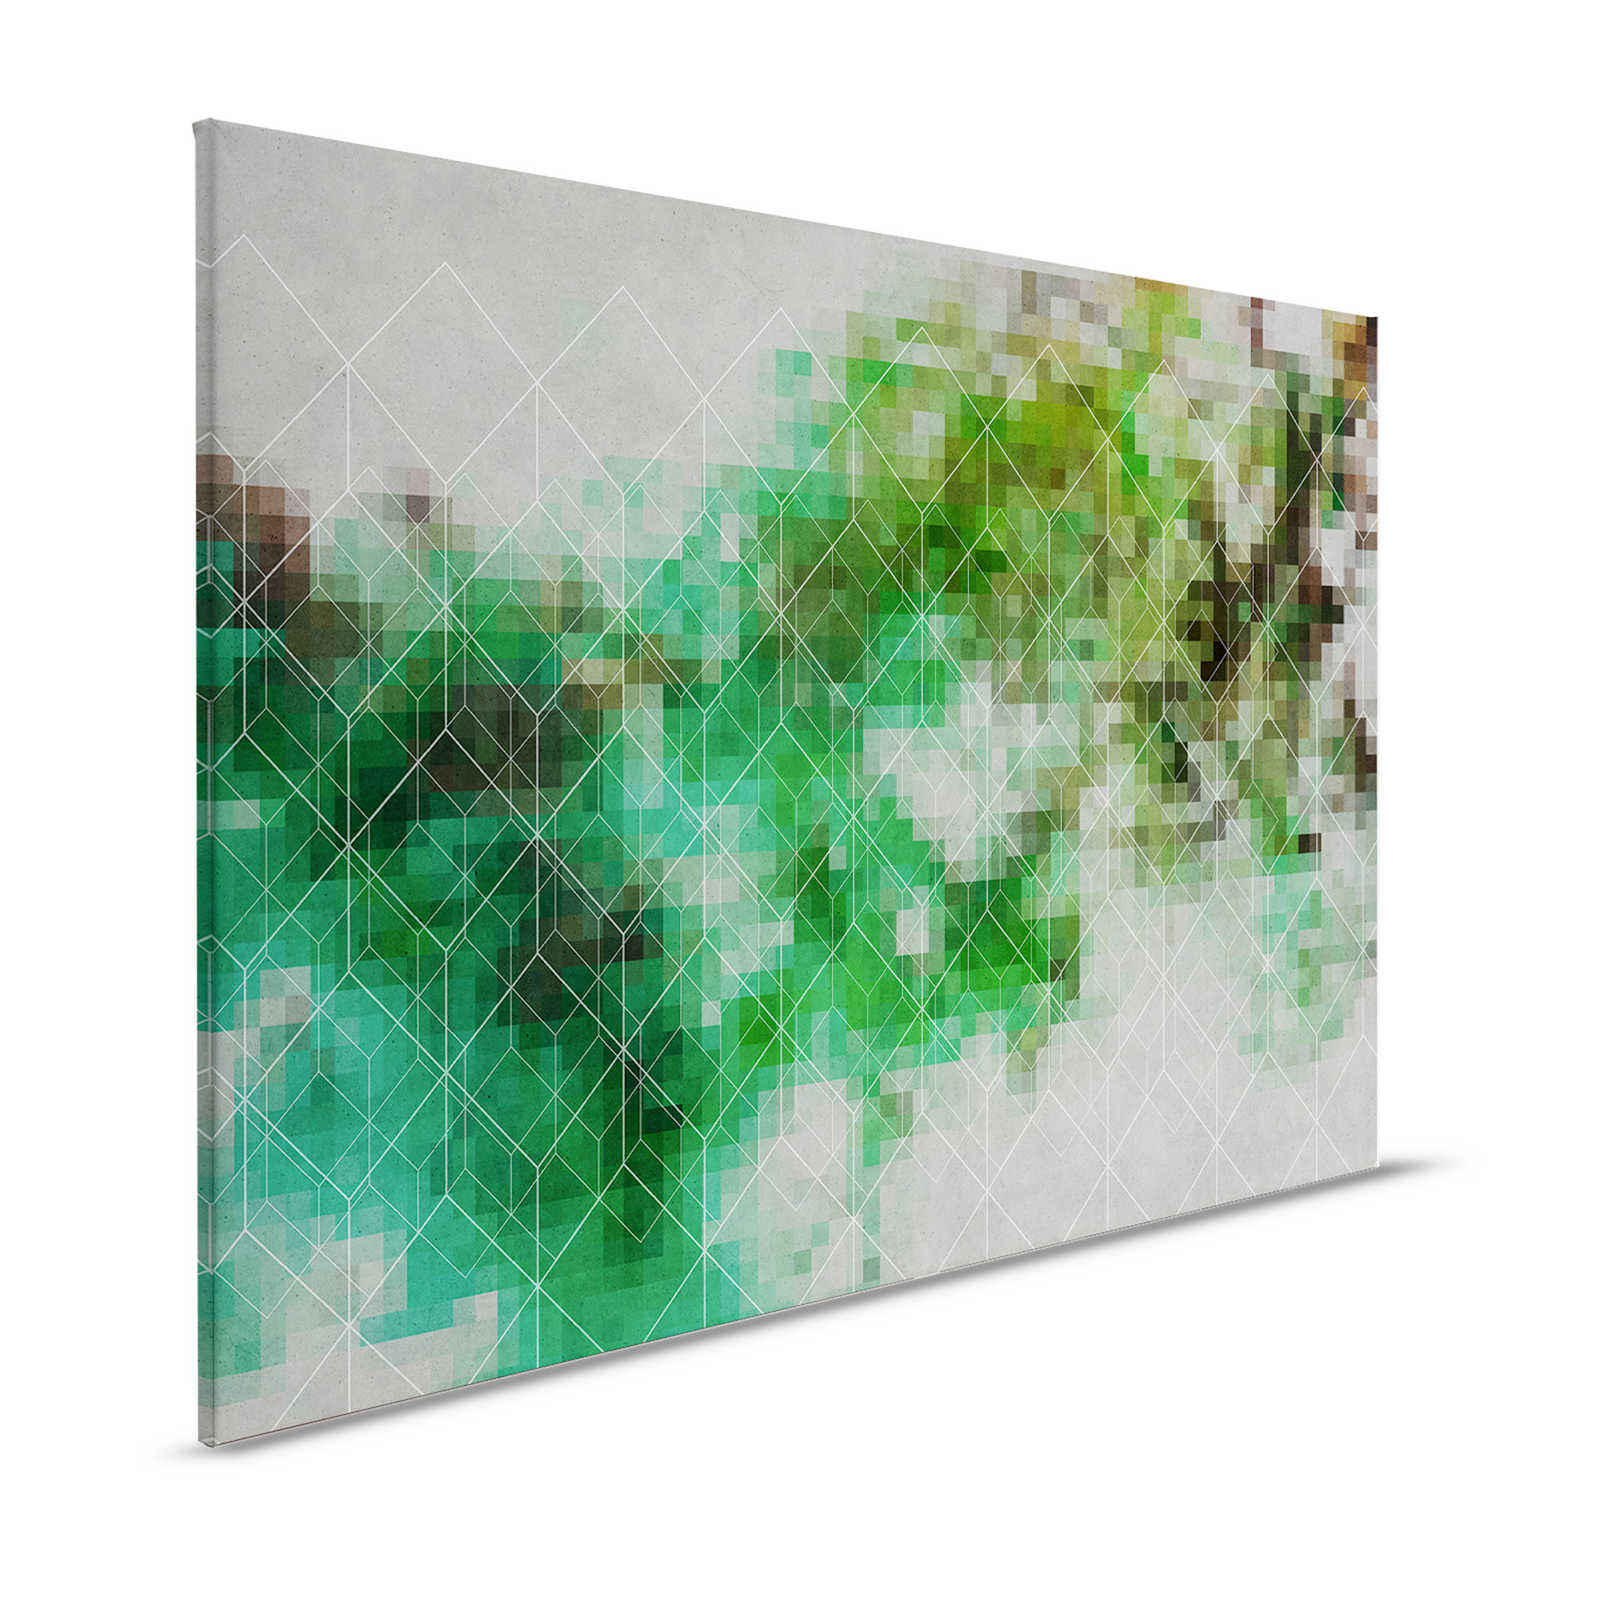 Leinwandbild Farbe-Wolken & Linienmuster | grün, grau – 1,20 m x 0,80 m
